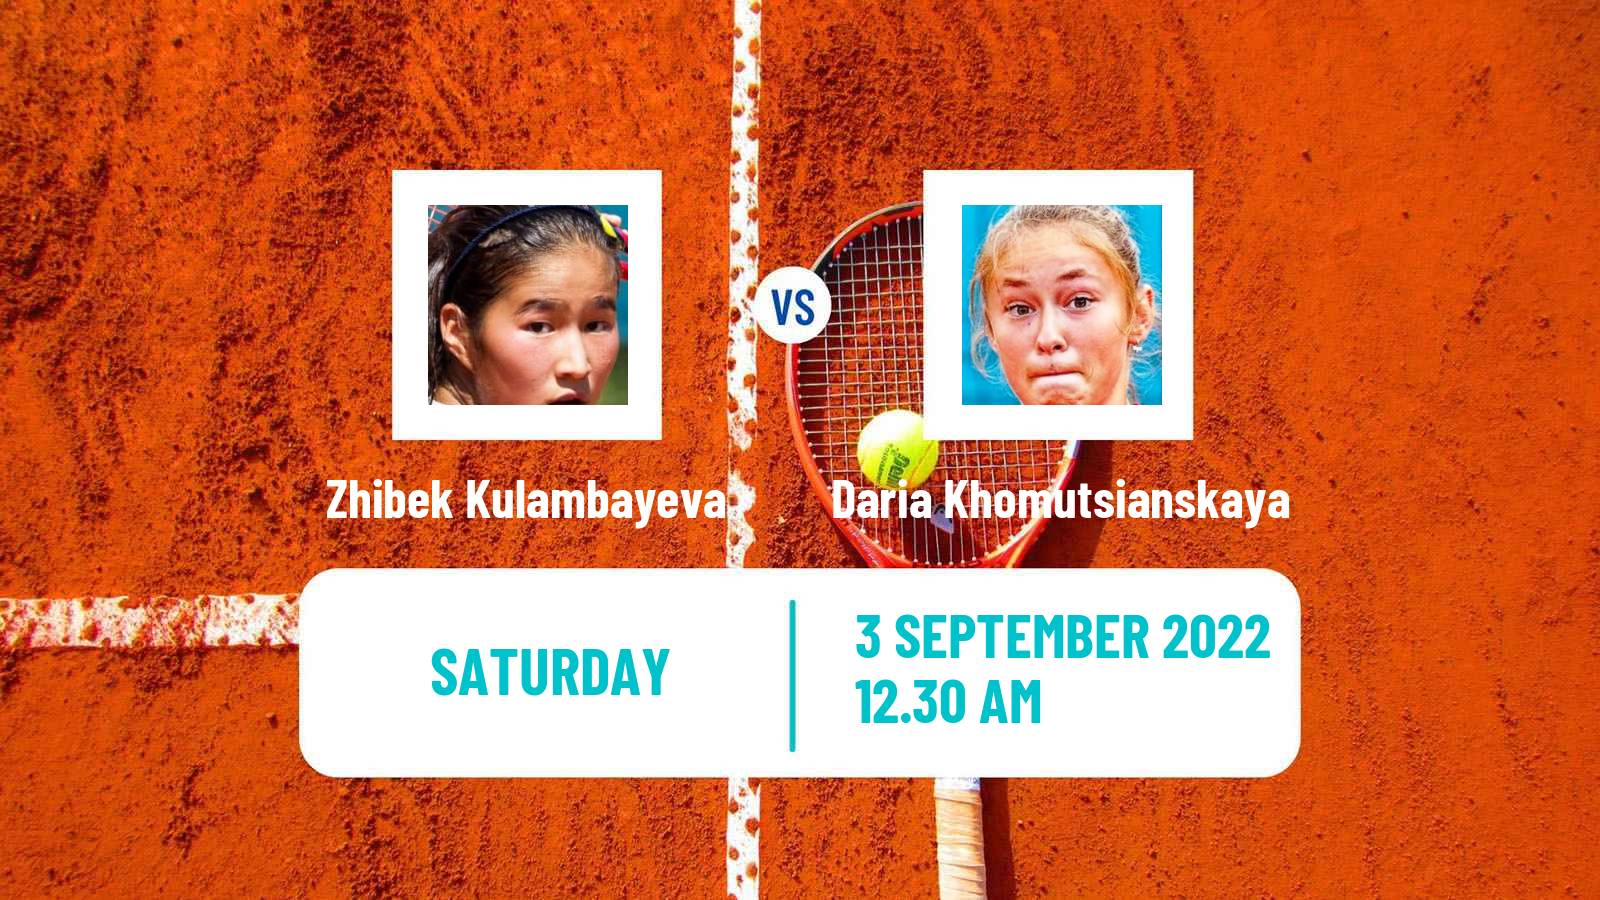 Tennis ITF Tournaments Zhibek Kulambayeva - Daria Khomutsianskaya